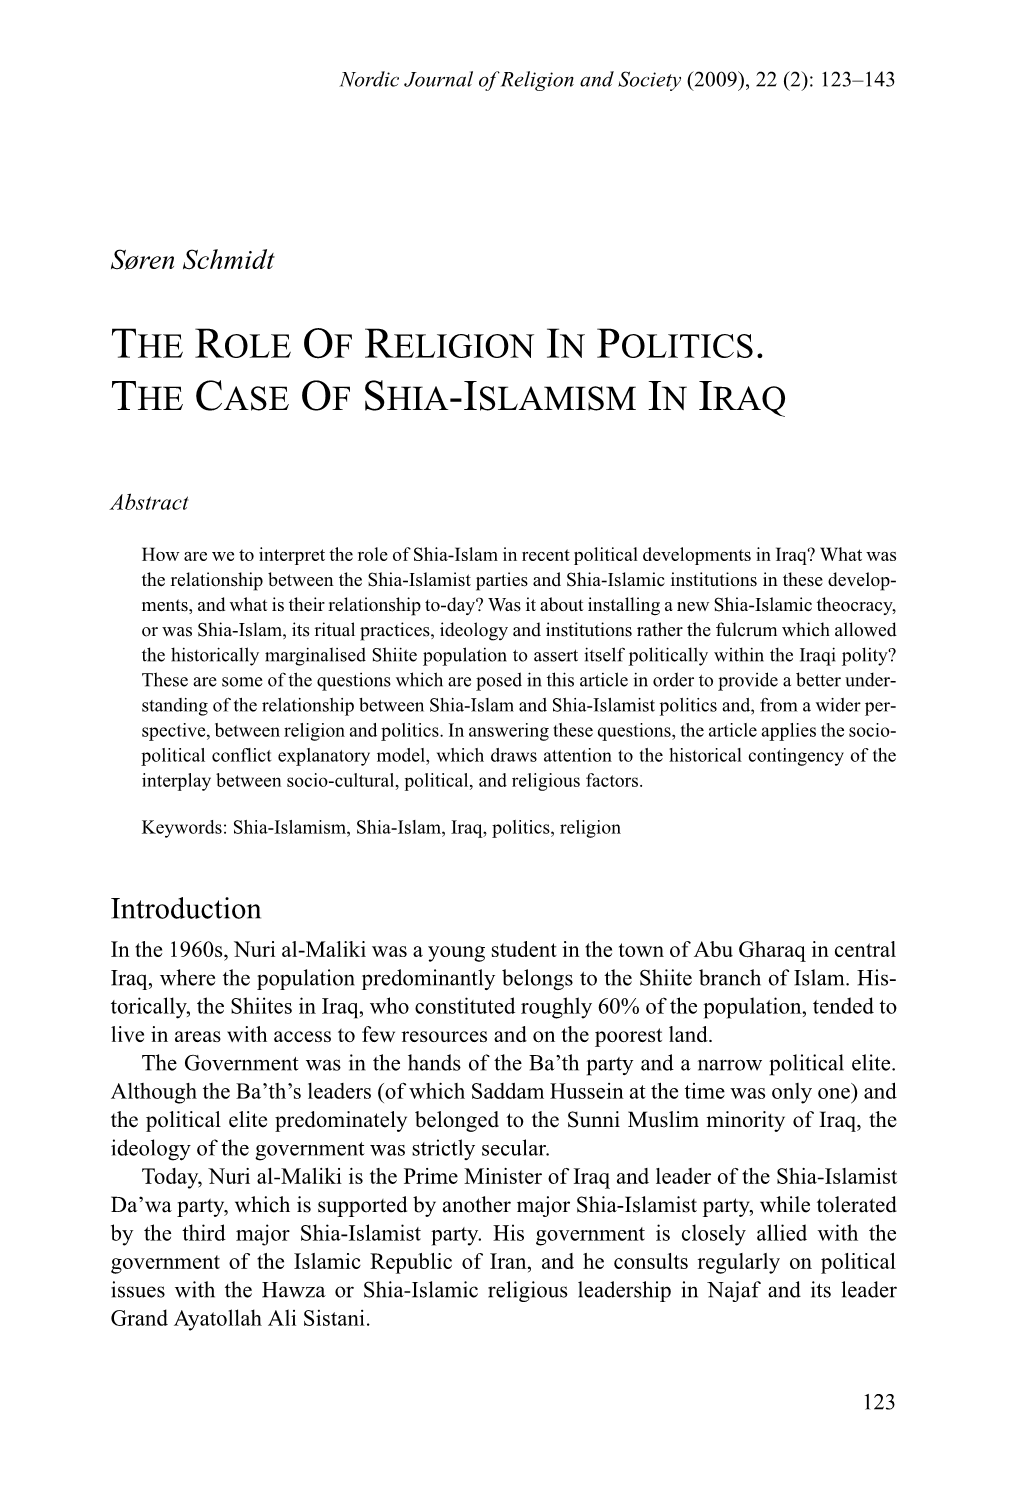 The Role of Religion in Politics. the Case of Shia-Islamism in Iraq